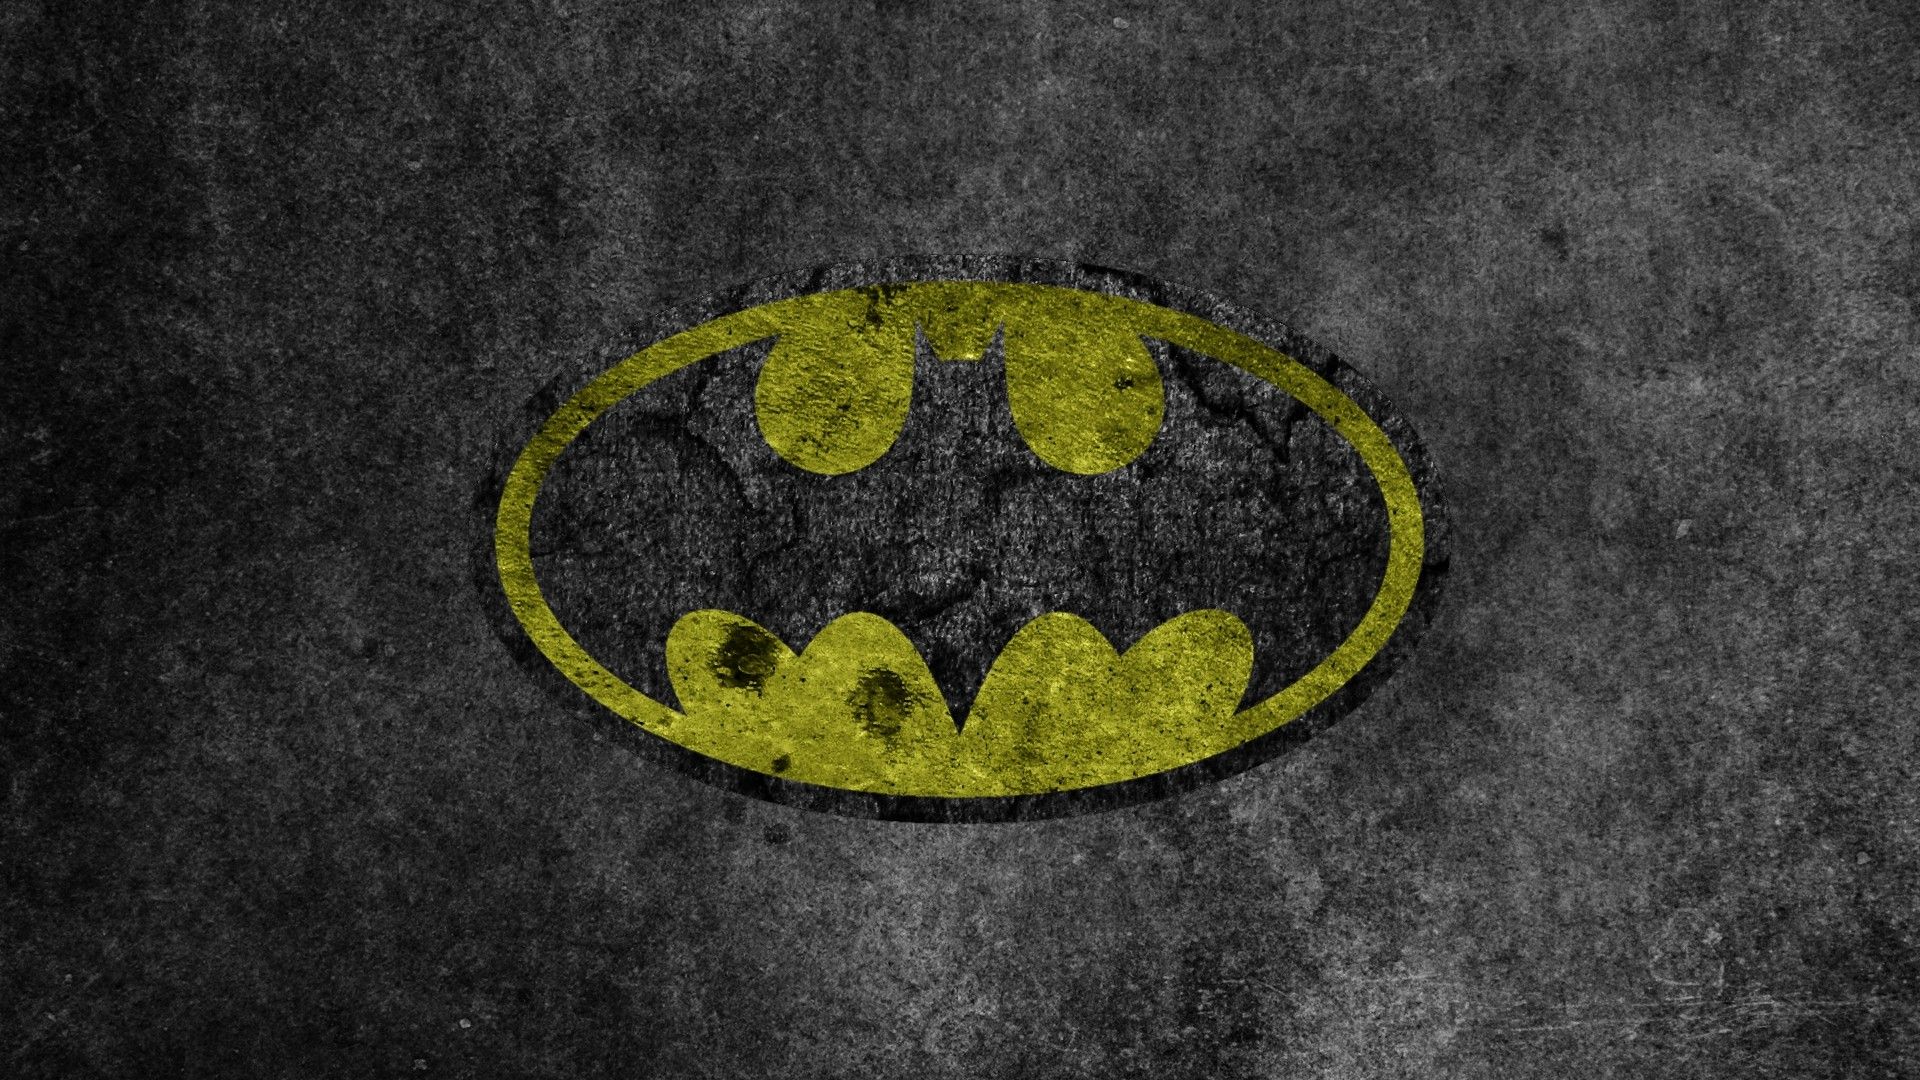 30 hd batman logo wallpaper hd batman wallpapers batman logo hd